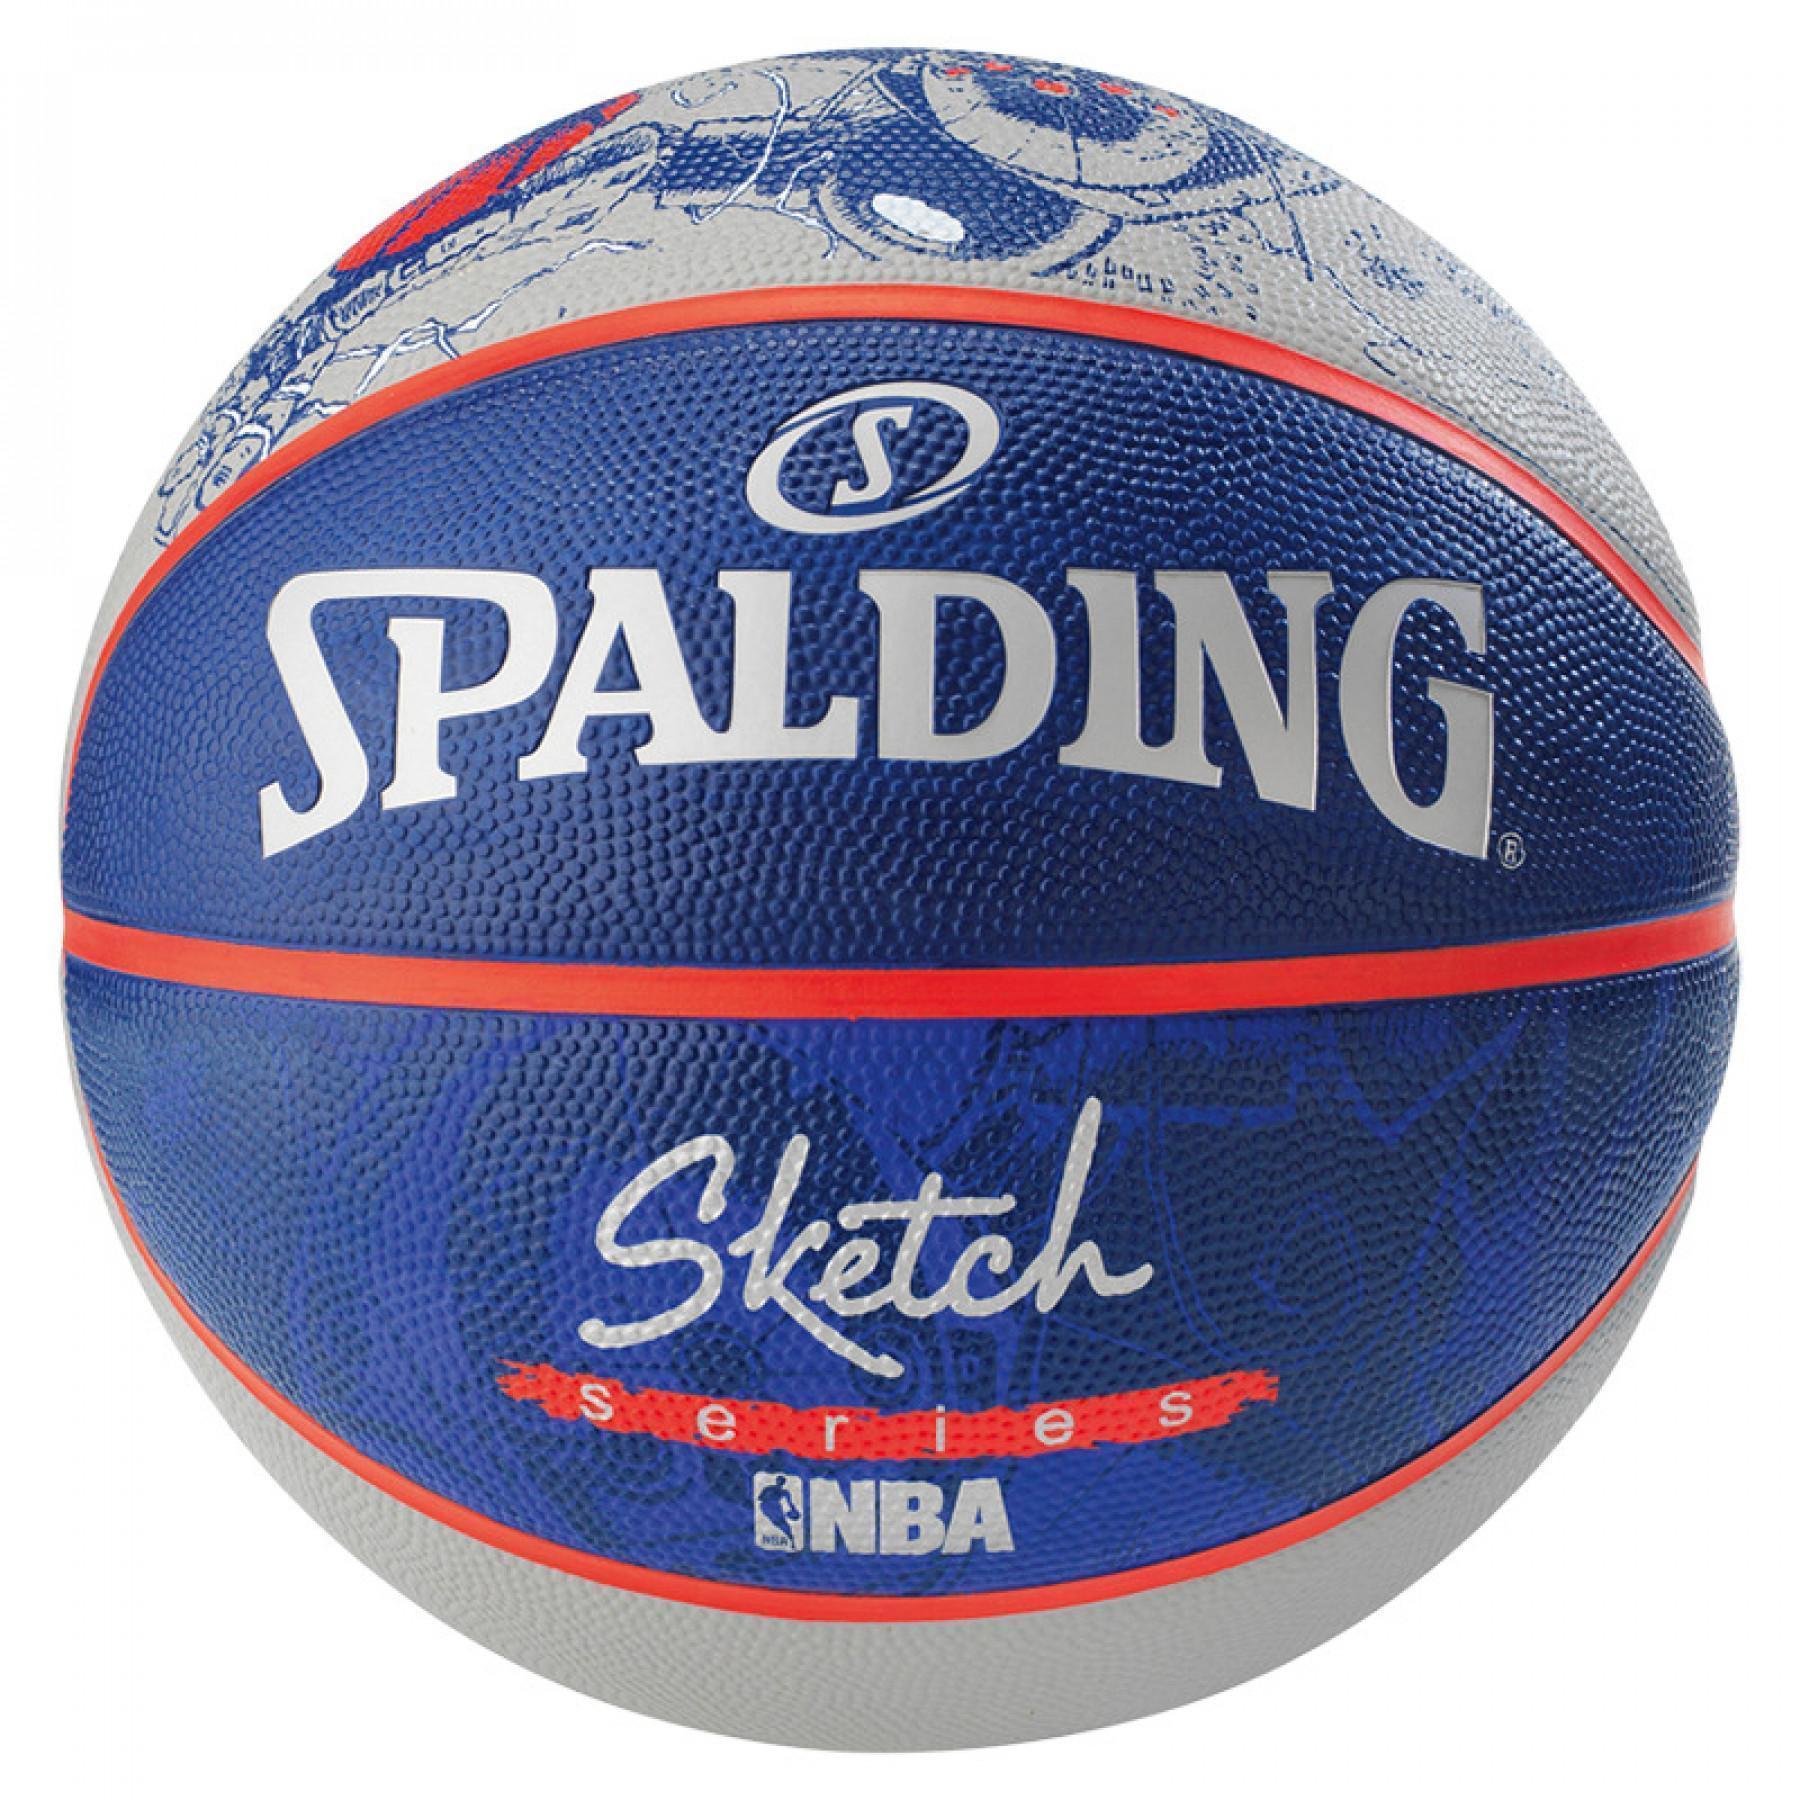 Balão Spalding NBA Sketch Robot (83-677z)